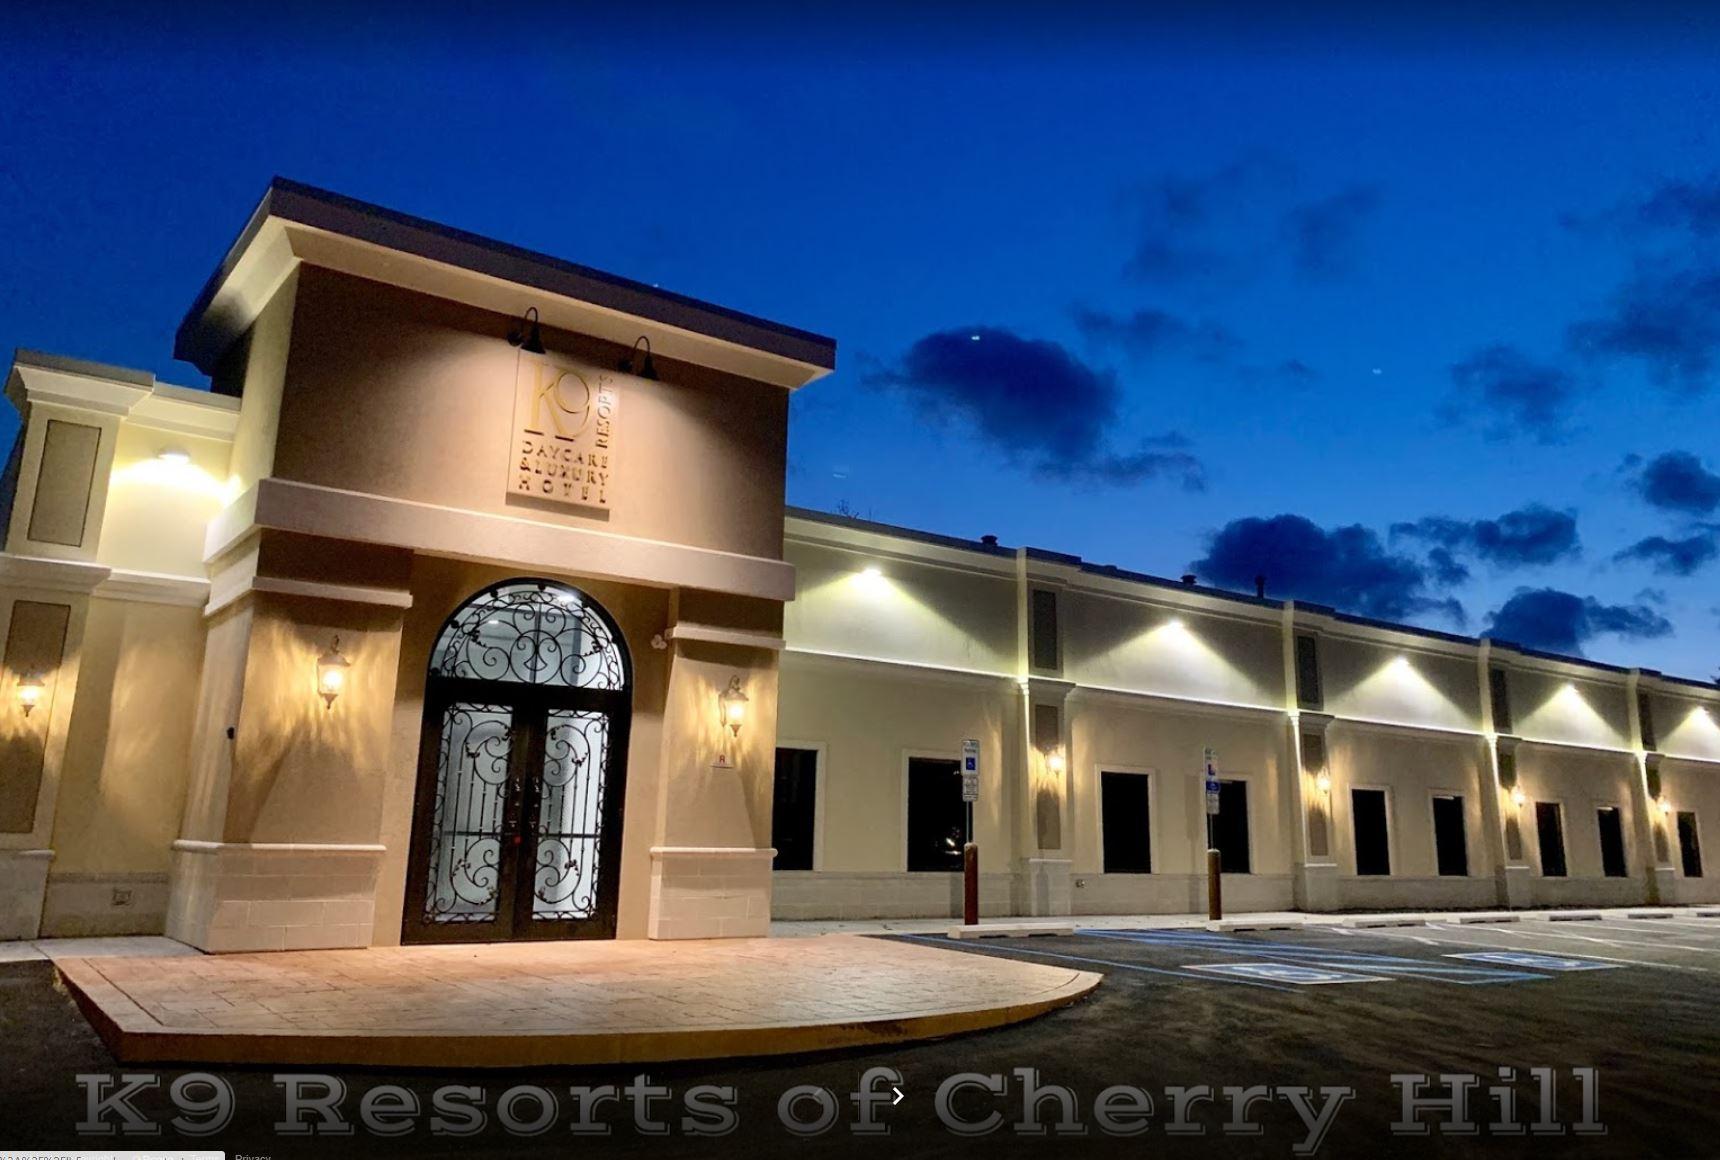 Pet Friendly K9 Resorts Luxury Pet Hotel Cherry Hill